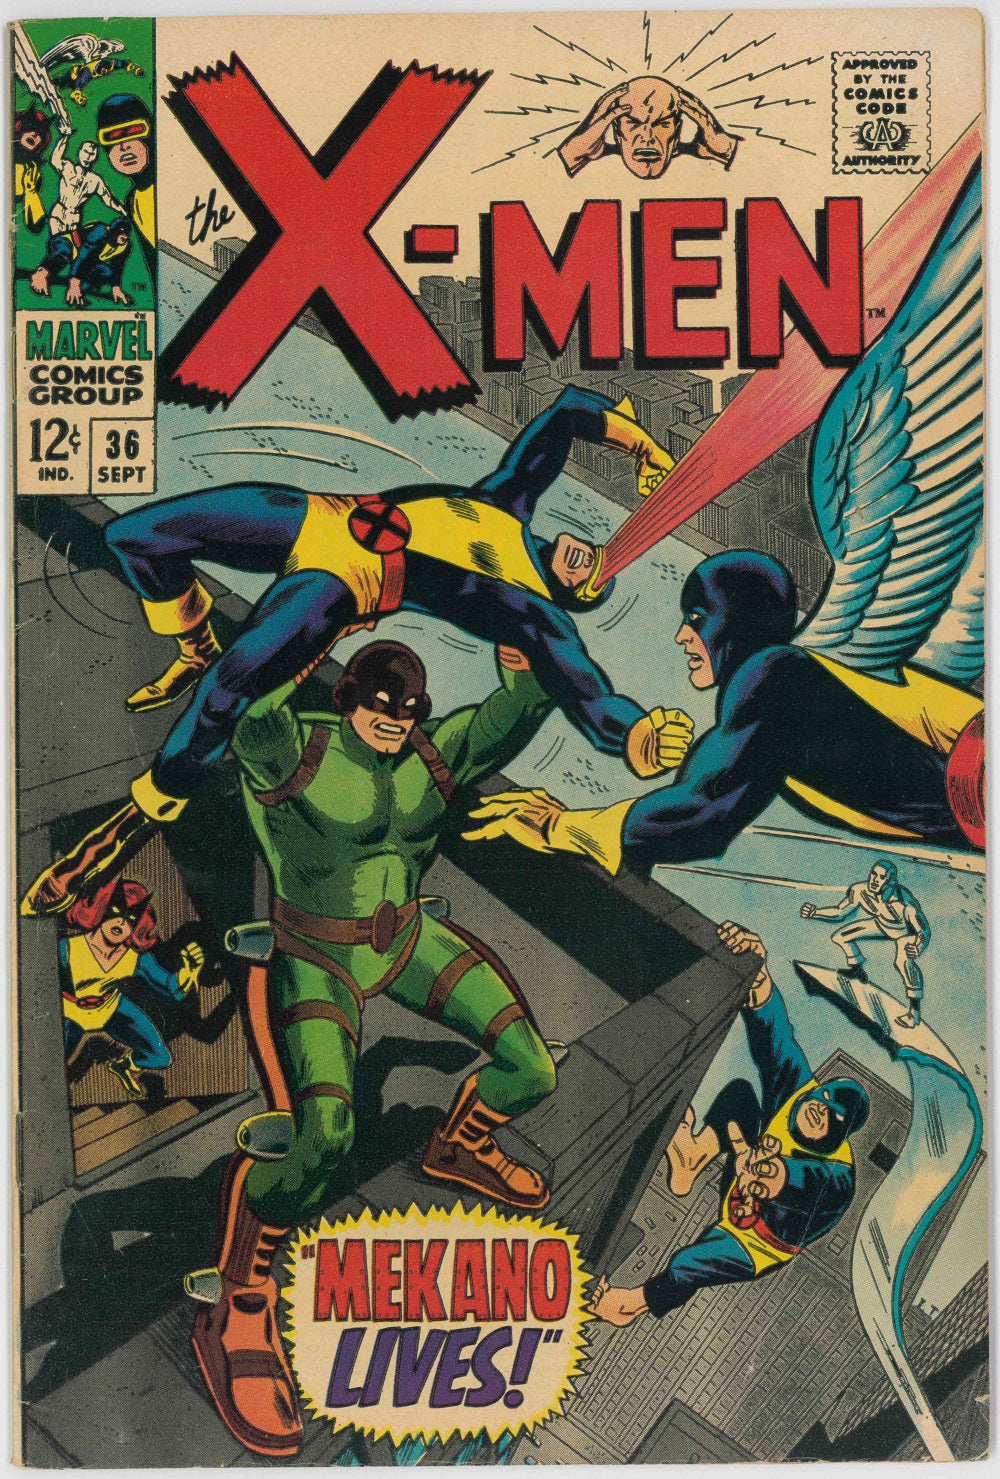 UNCANNY X-MEN (1963) #36 (VF)